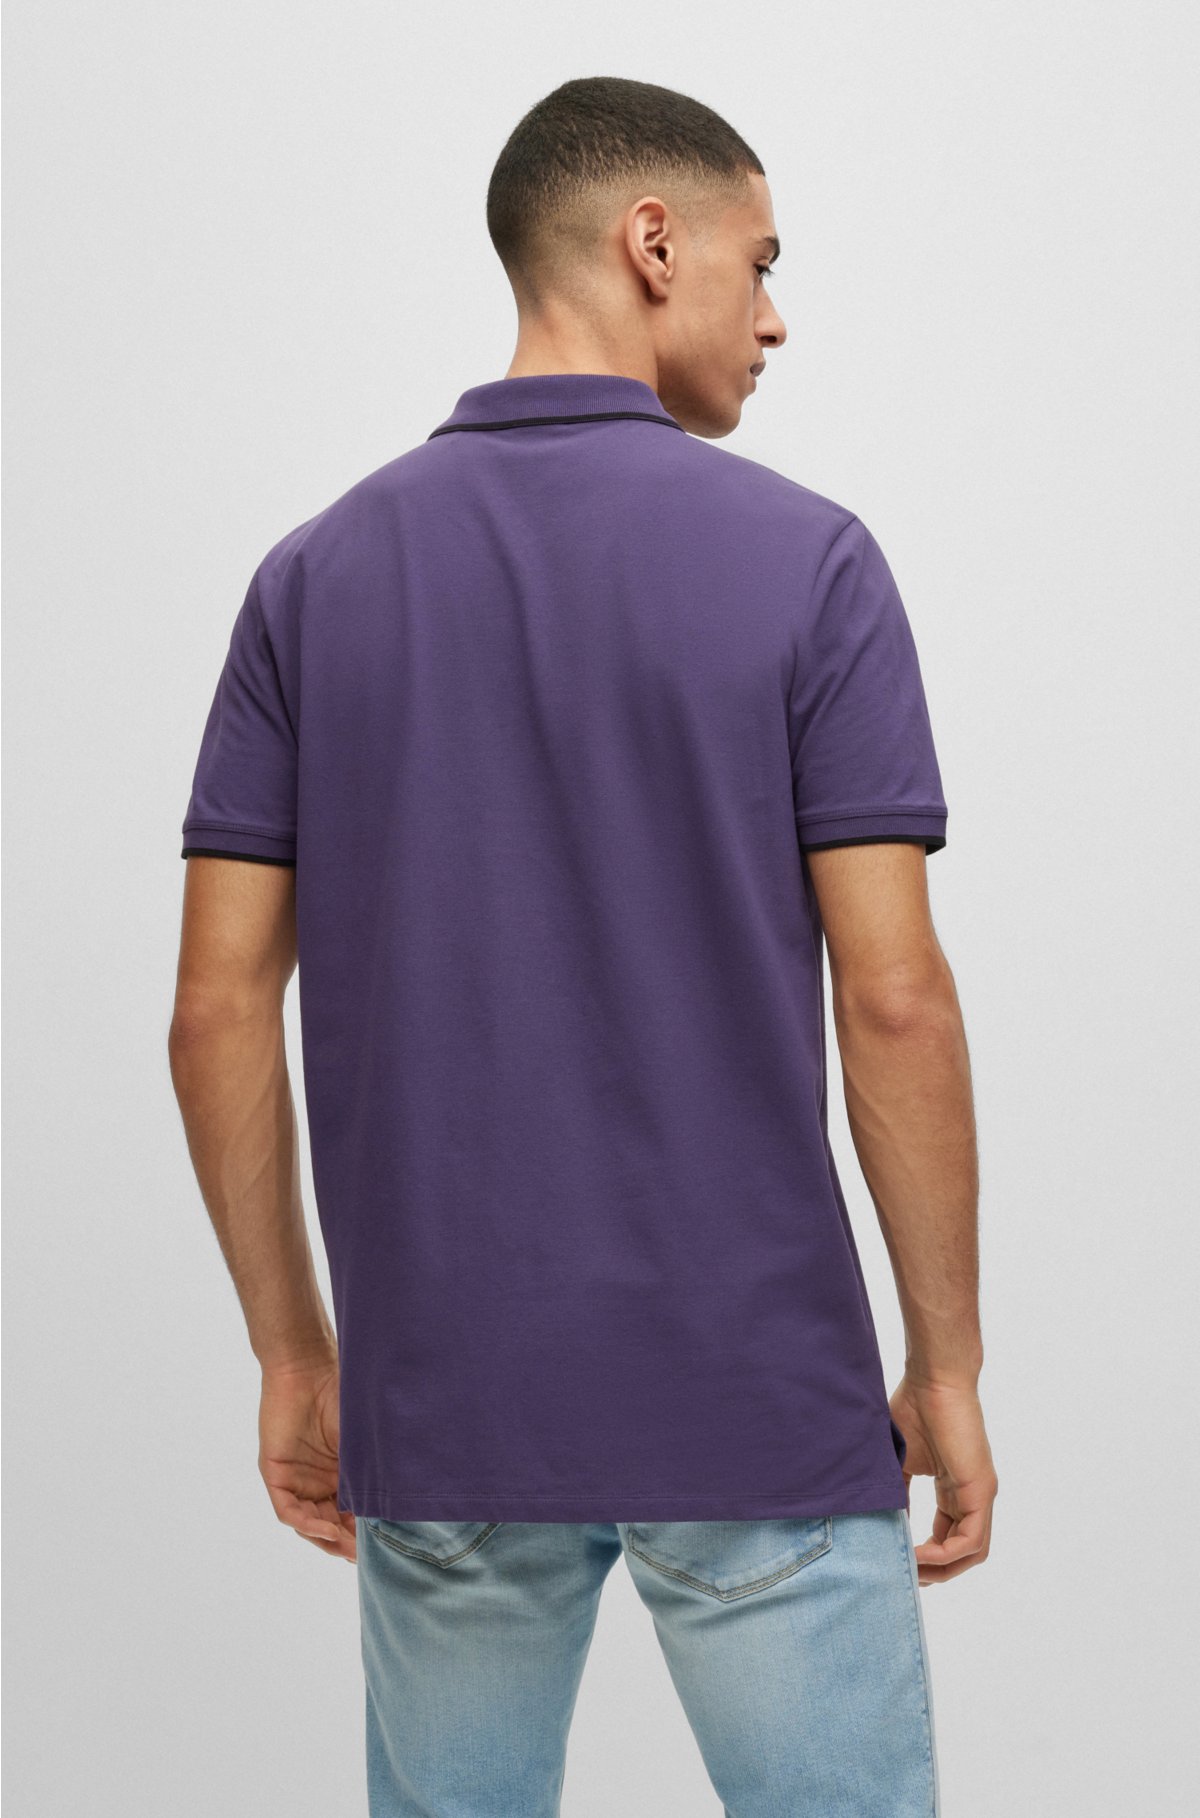 Printed Cotton Slim Fit Men's T-Shirt